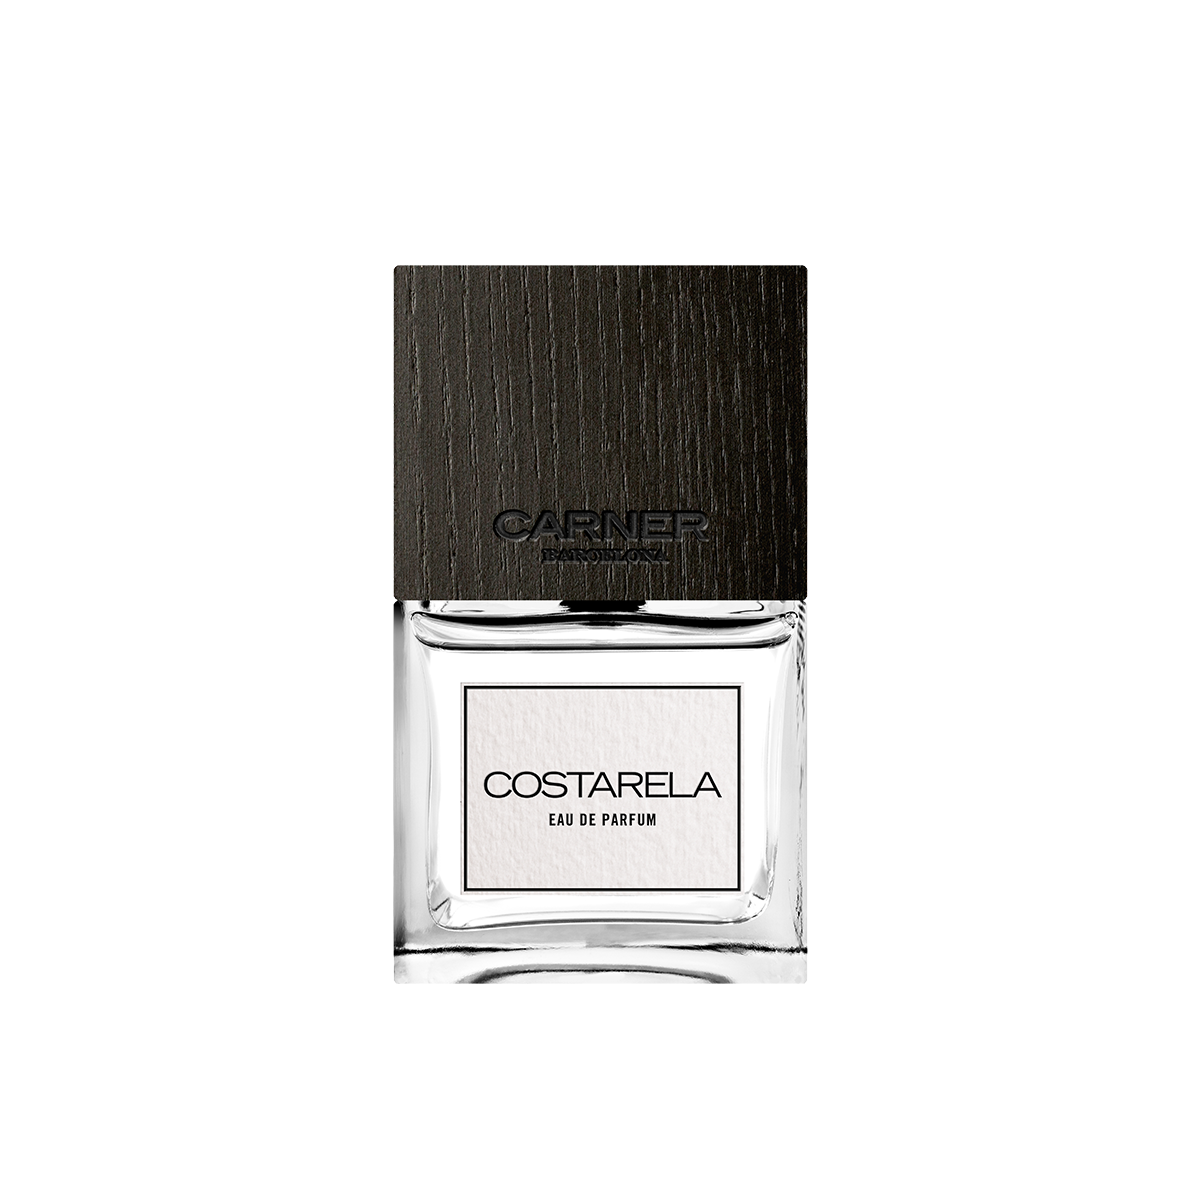 Costarela <br> Eau de Parfum 50ml / 100ml